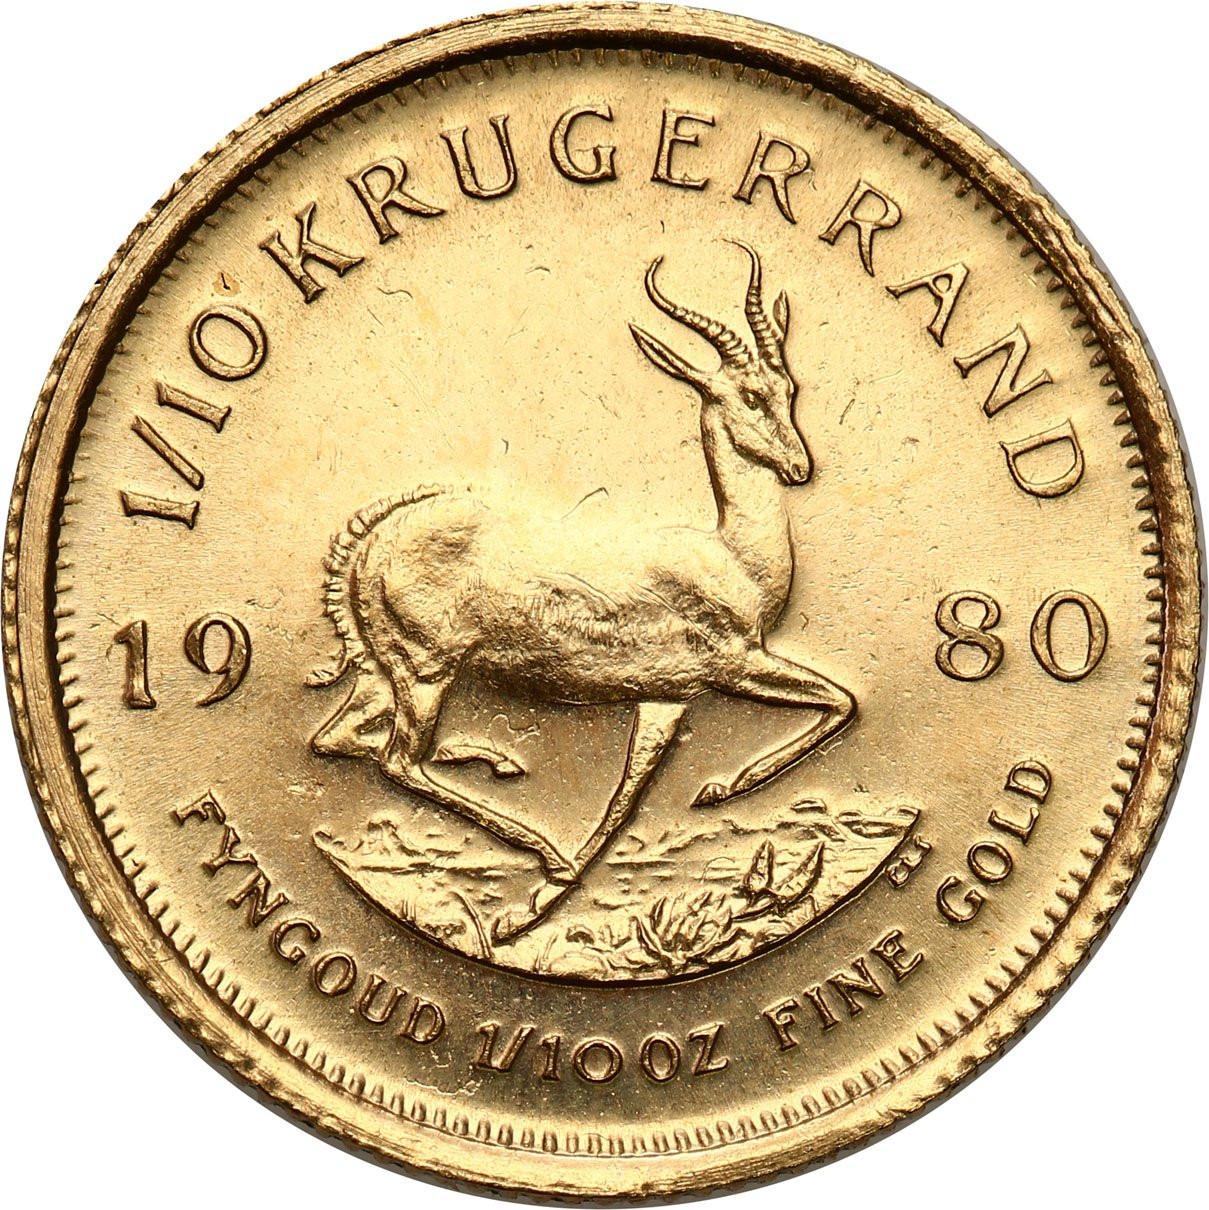 RPA 1/10 Krugerranda 1980 - 1/10 uncji złota